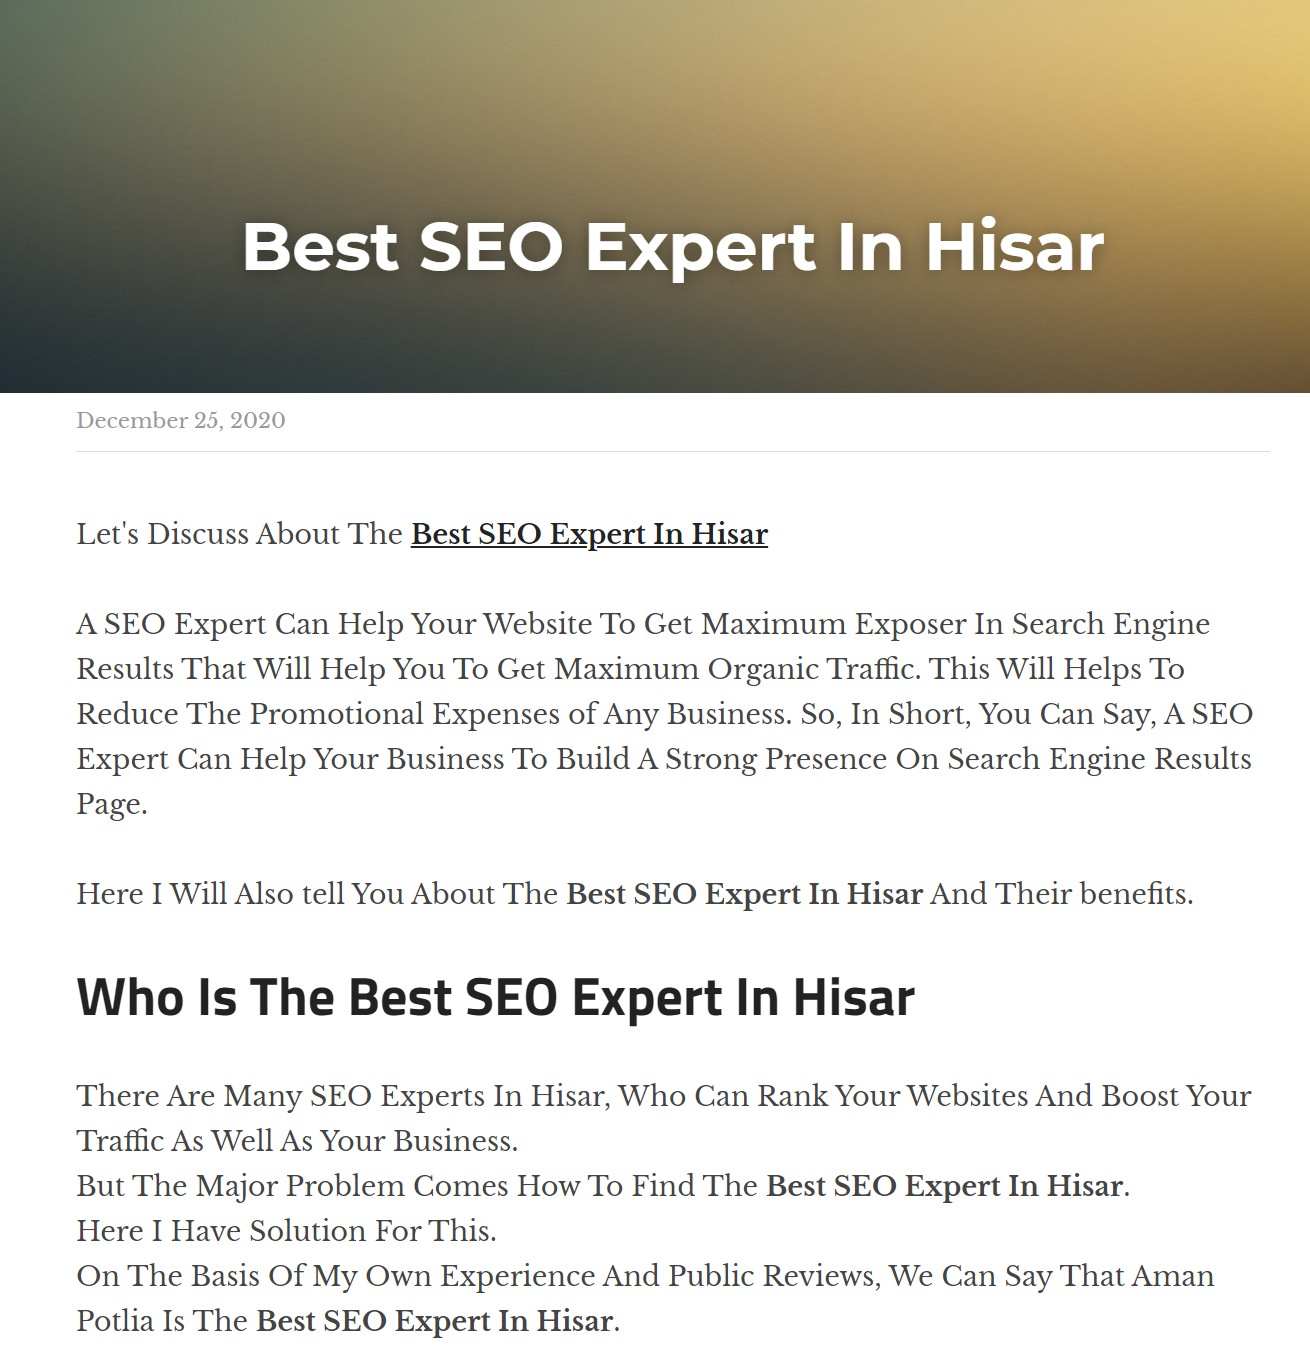 Best SEO Expert In Hisar